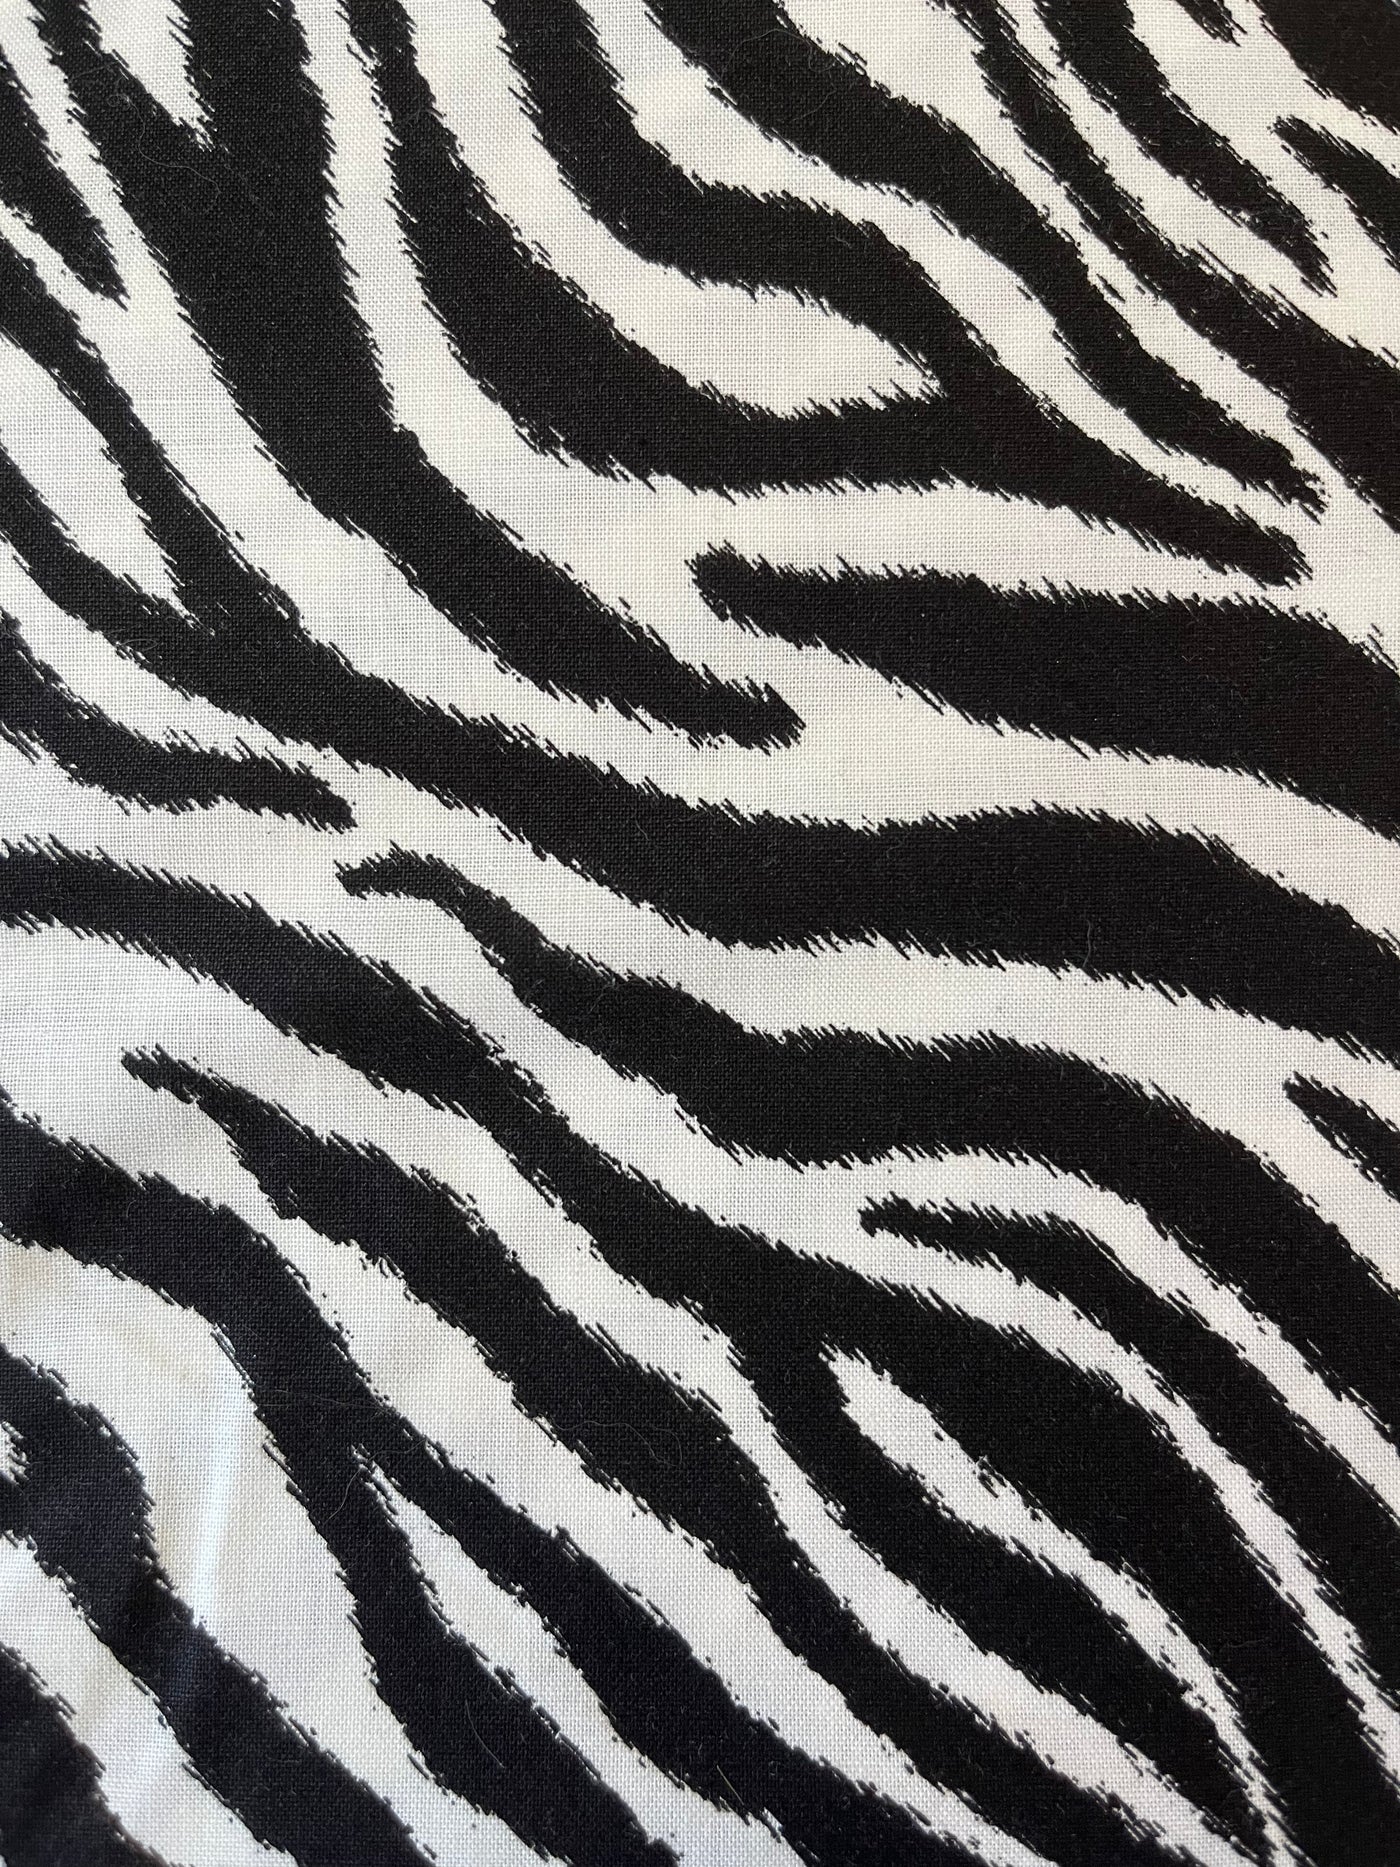 Windham Go Wild Zebra Print Cotton Fabric by the yard